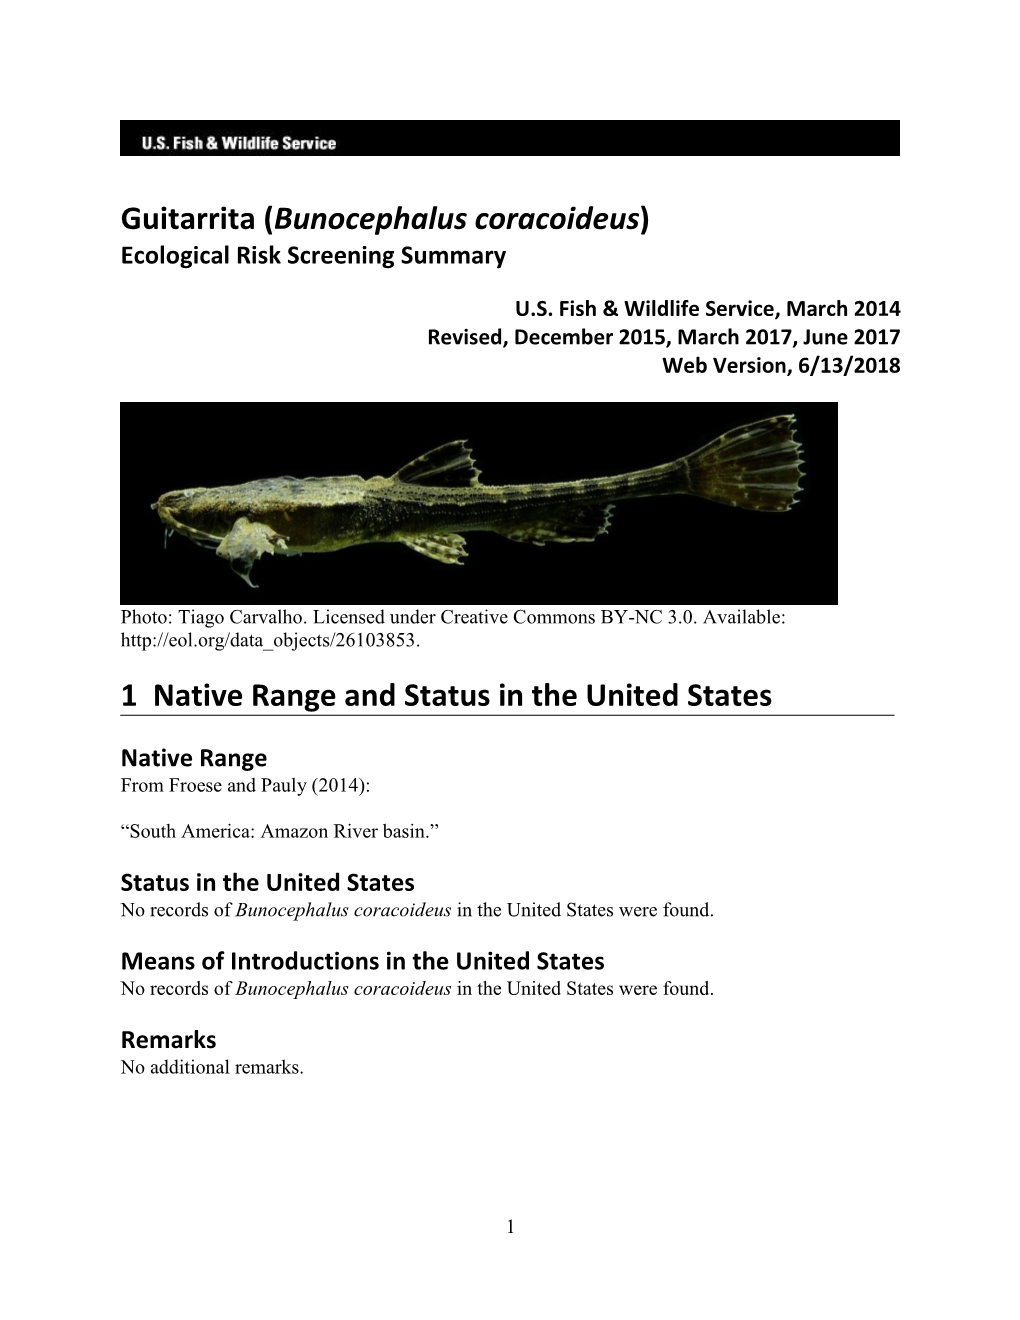 Bunocephalus Coracoideus) Ecological Risk Screening Summary